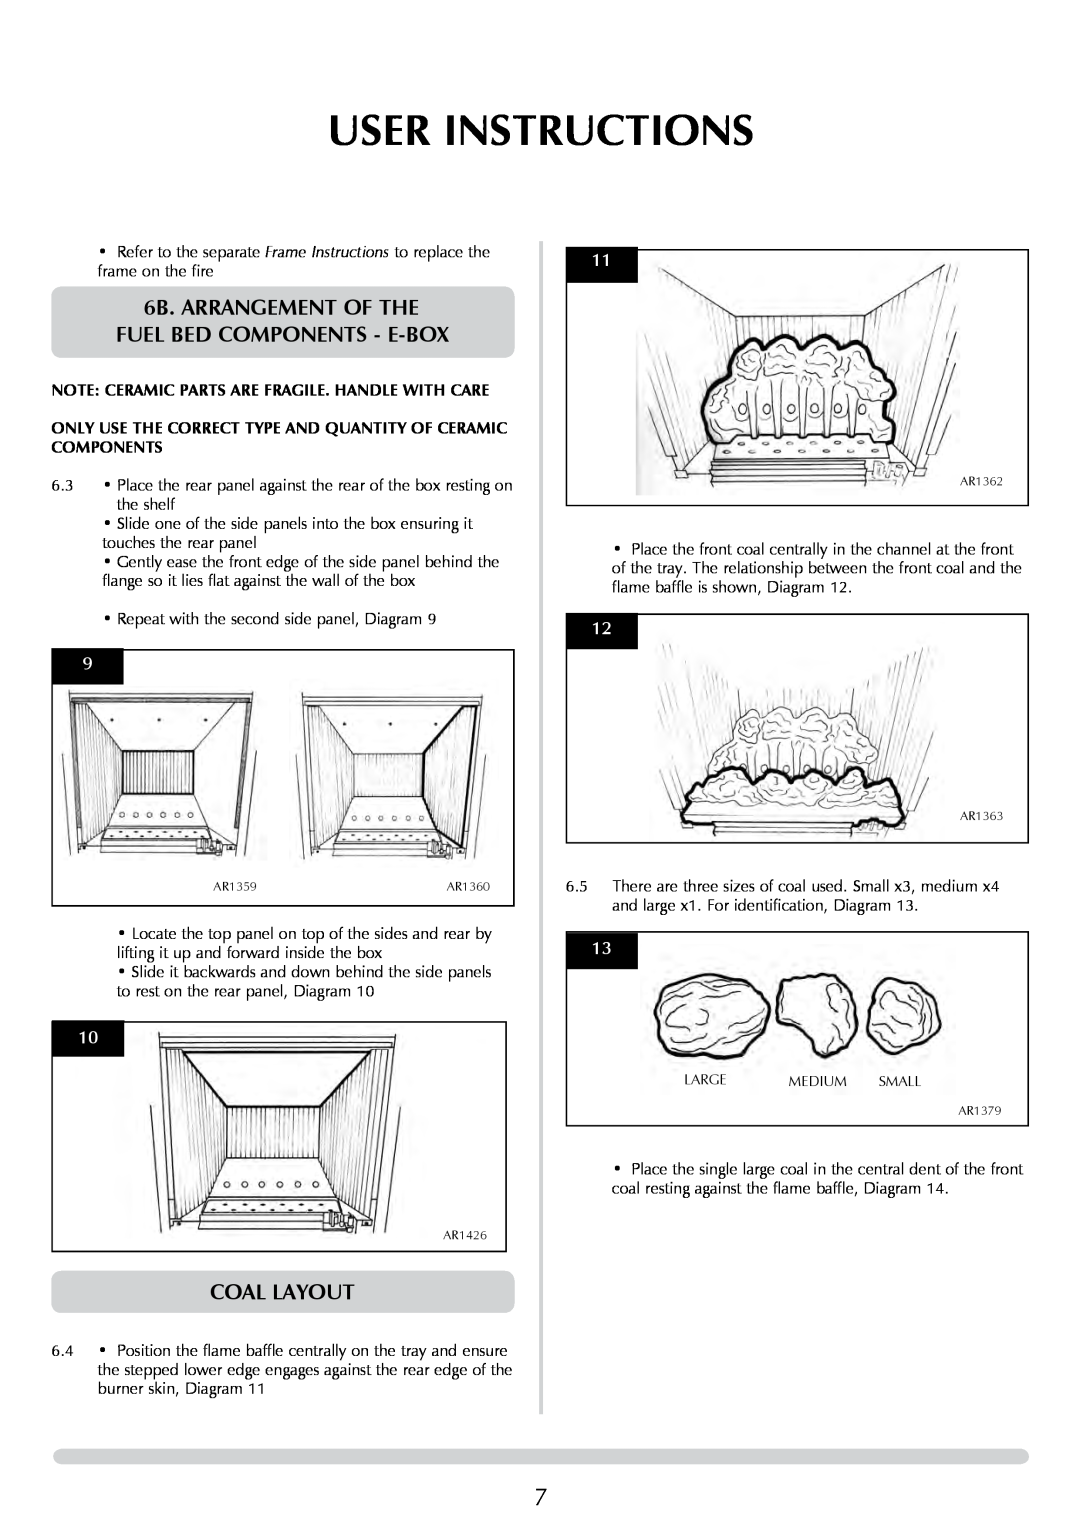 Stovax PR0776 manual Coal Layout, 6B. ARRANGeMENT OF THE FUEL BED COMPONENTS - E-BOX, User Instructions 